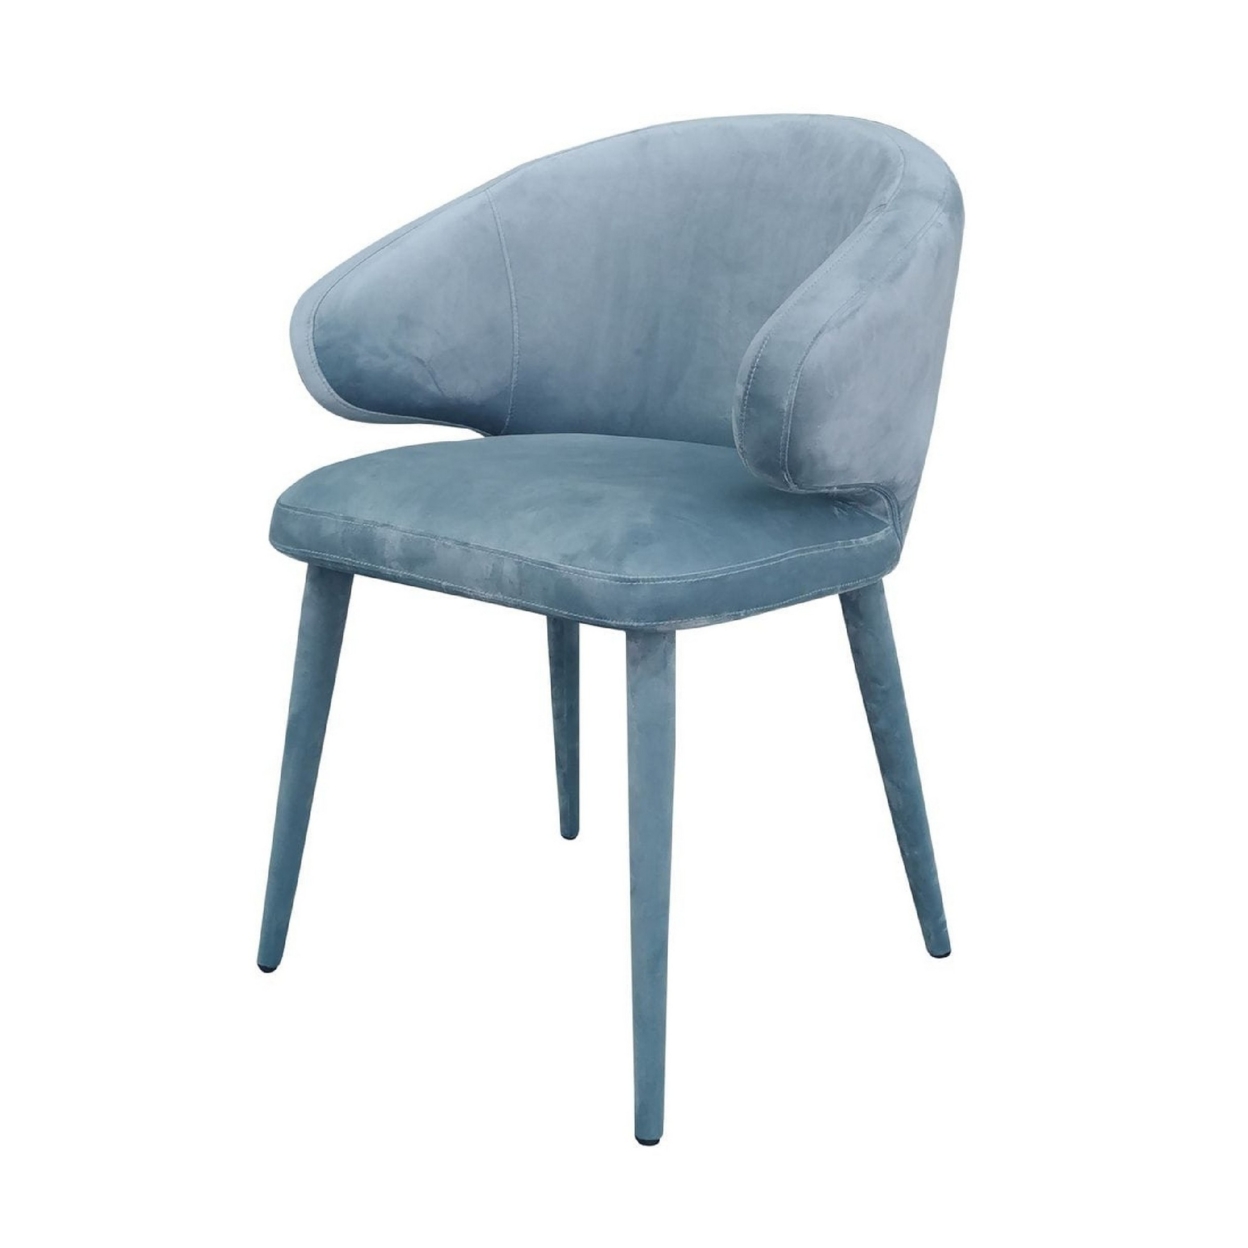 Cid 24 Inch Modern Dining Chair, Blue Velour Fabric, Curved Back- Saltoro Sherpi